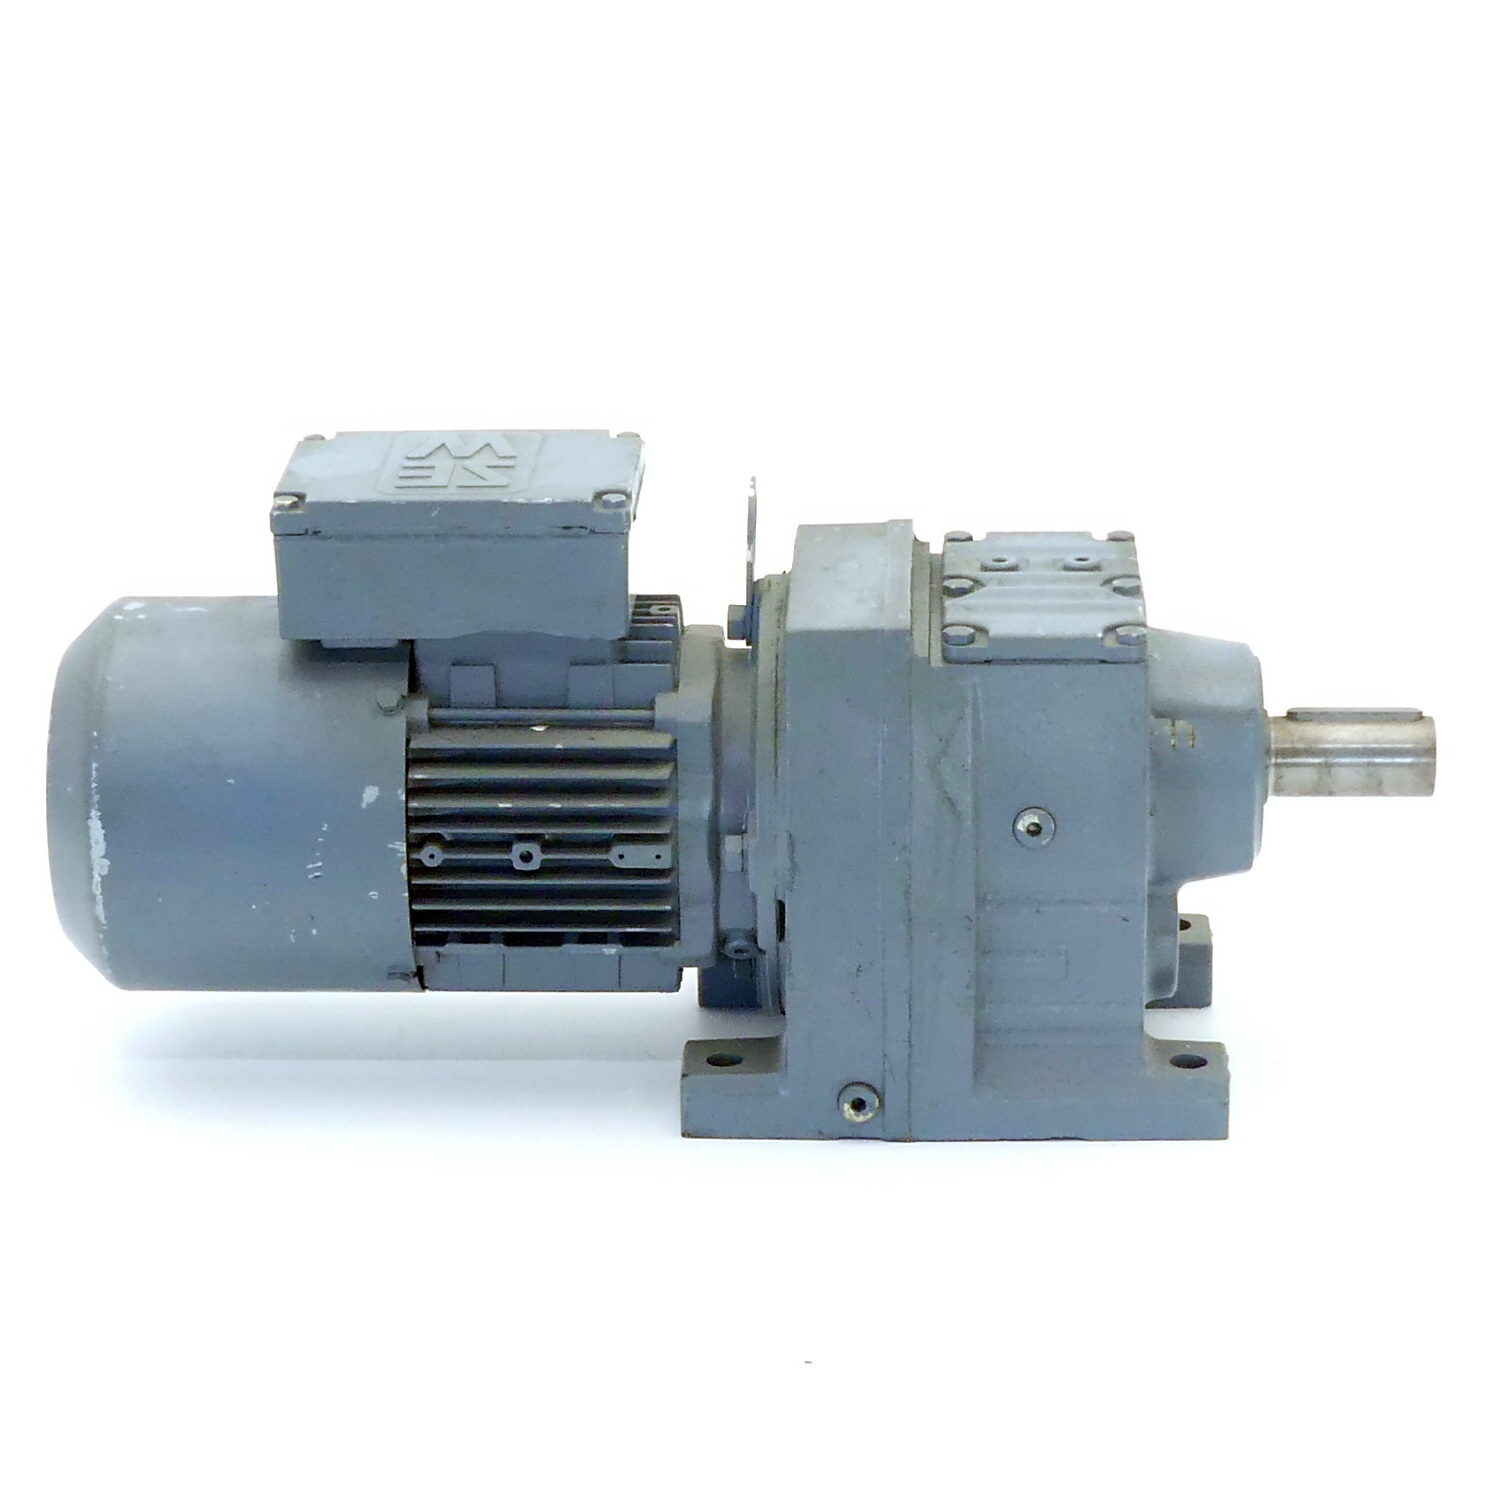 Gear motor R47 DT71D8-4/BMG 